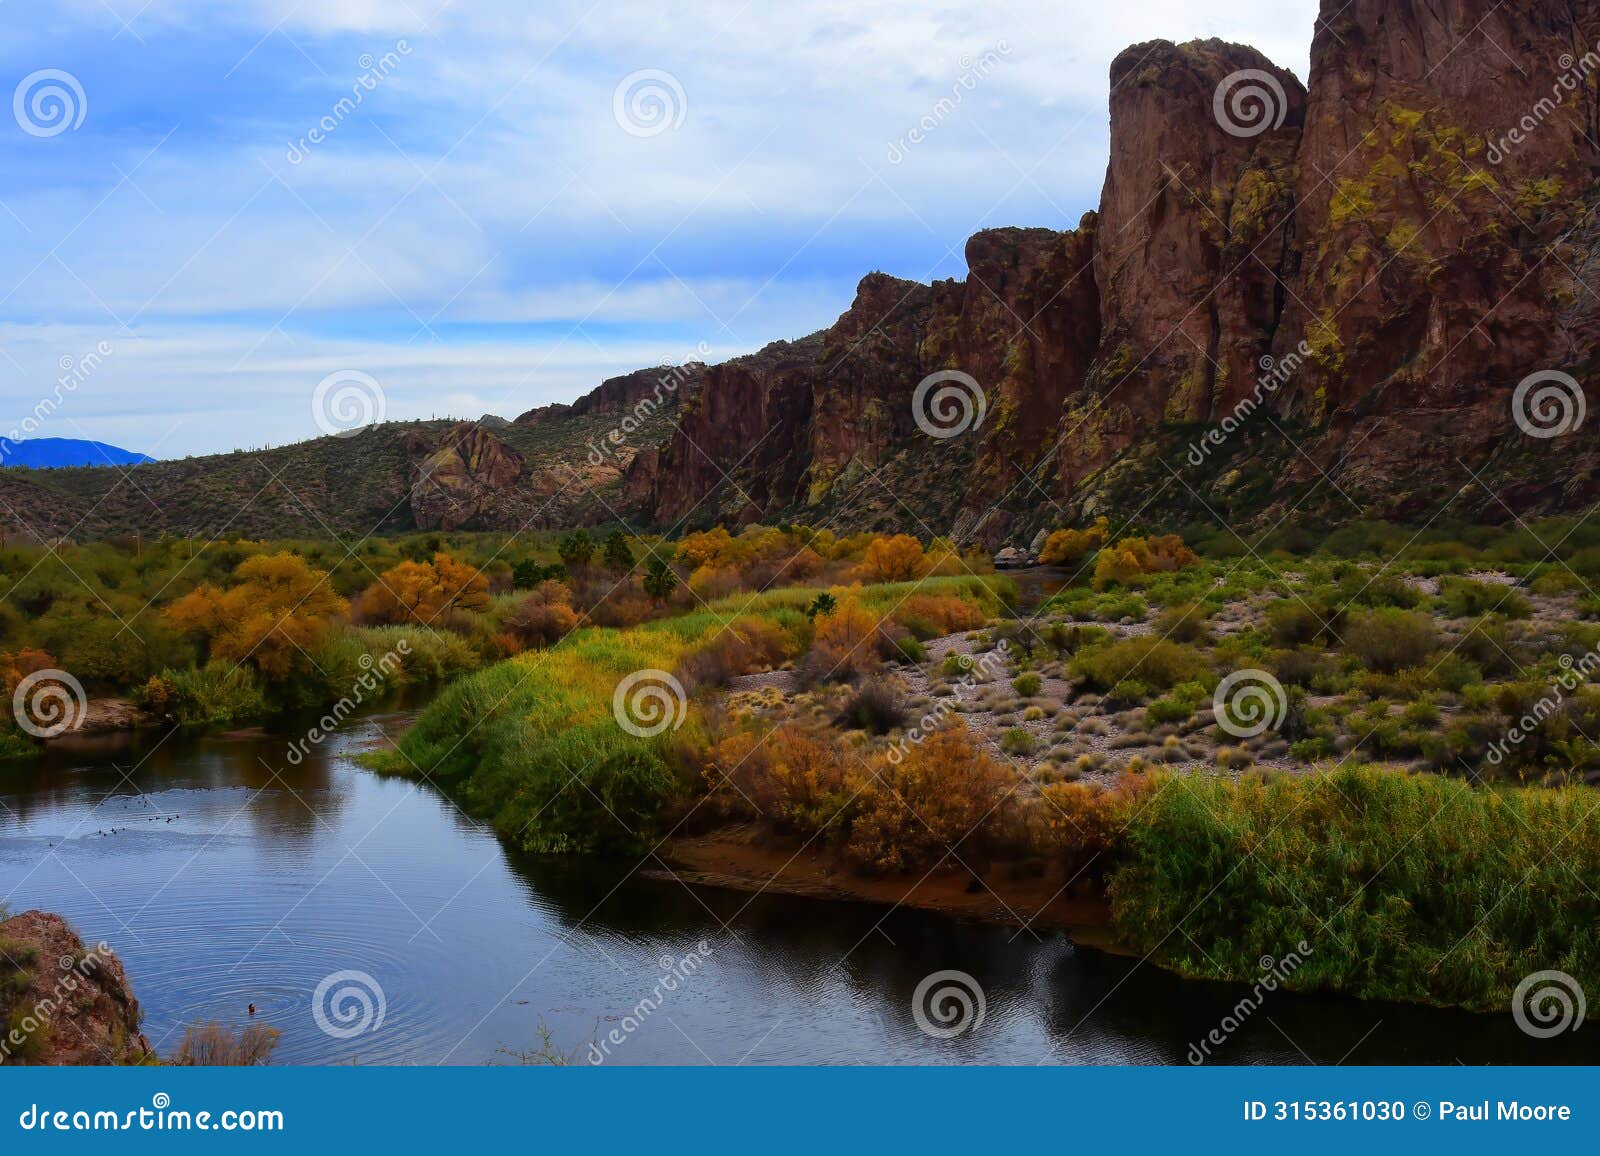 salt river recreation area arizona